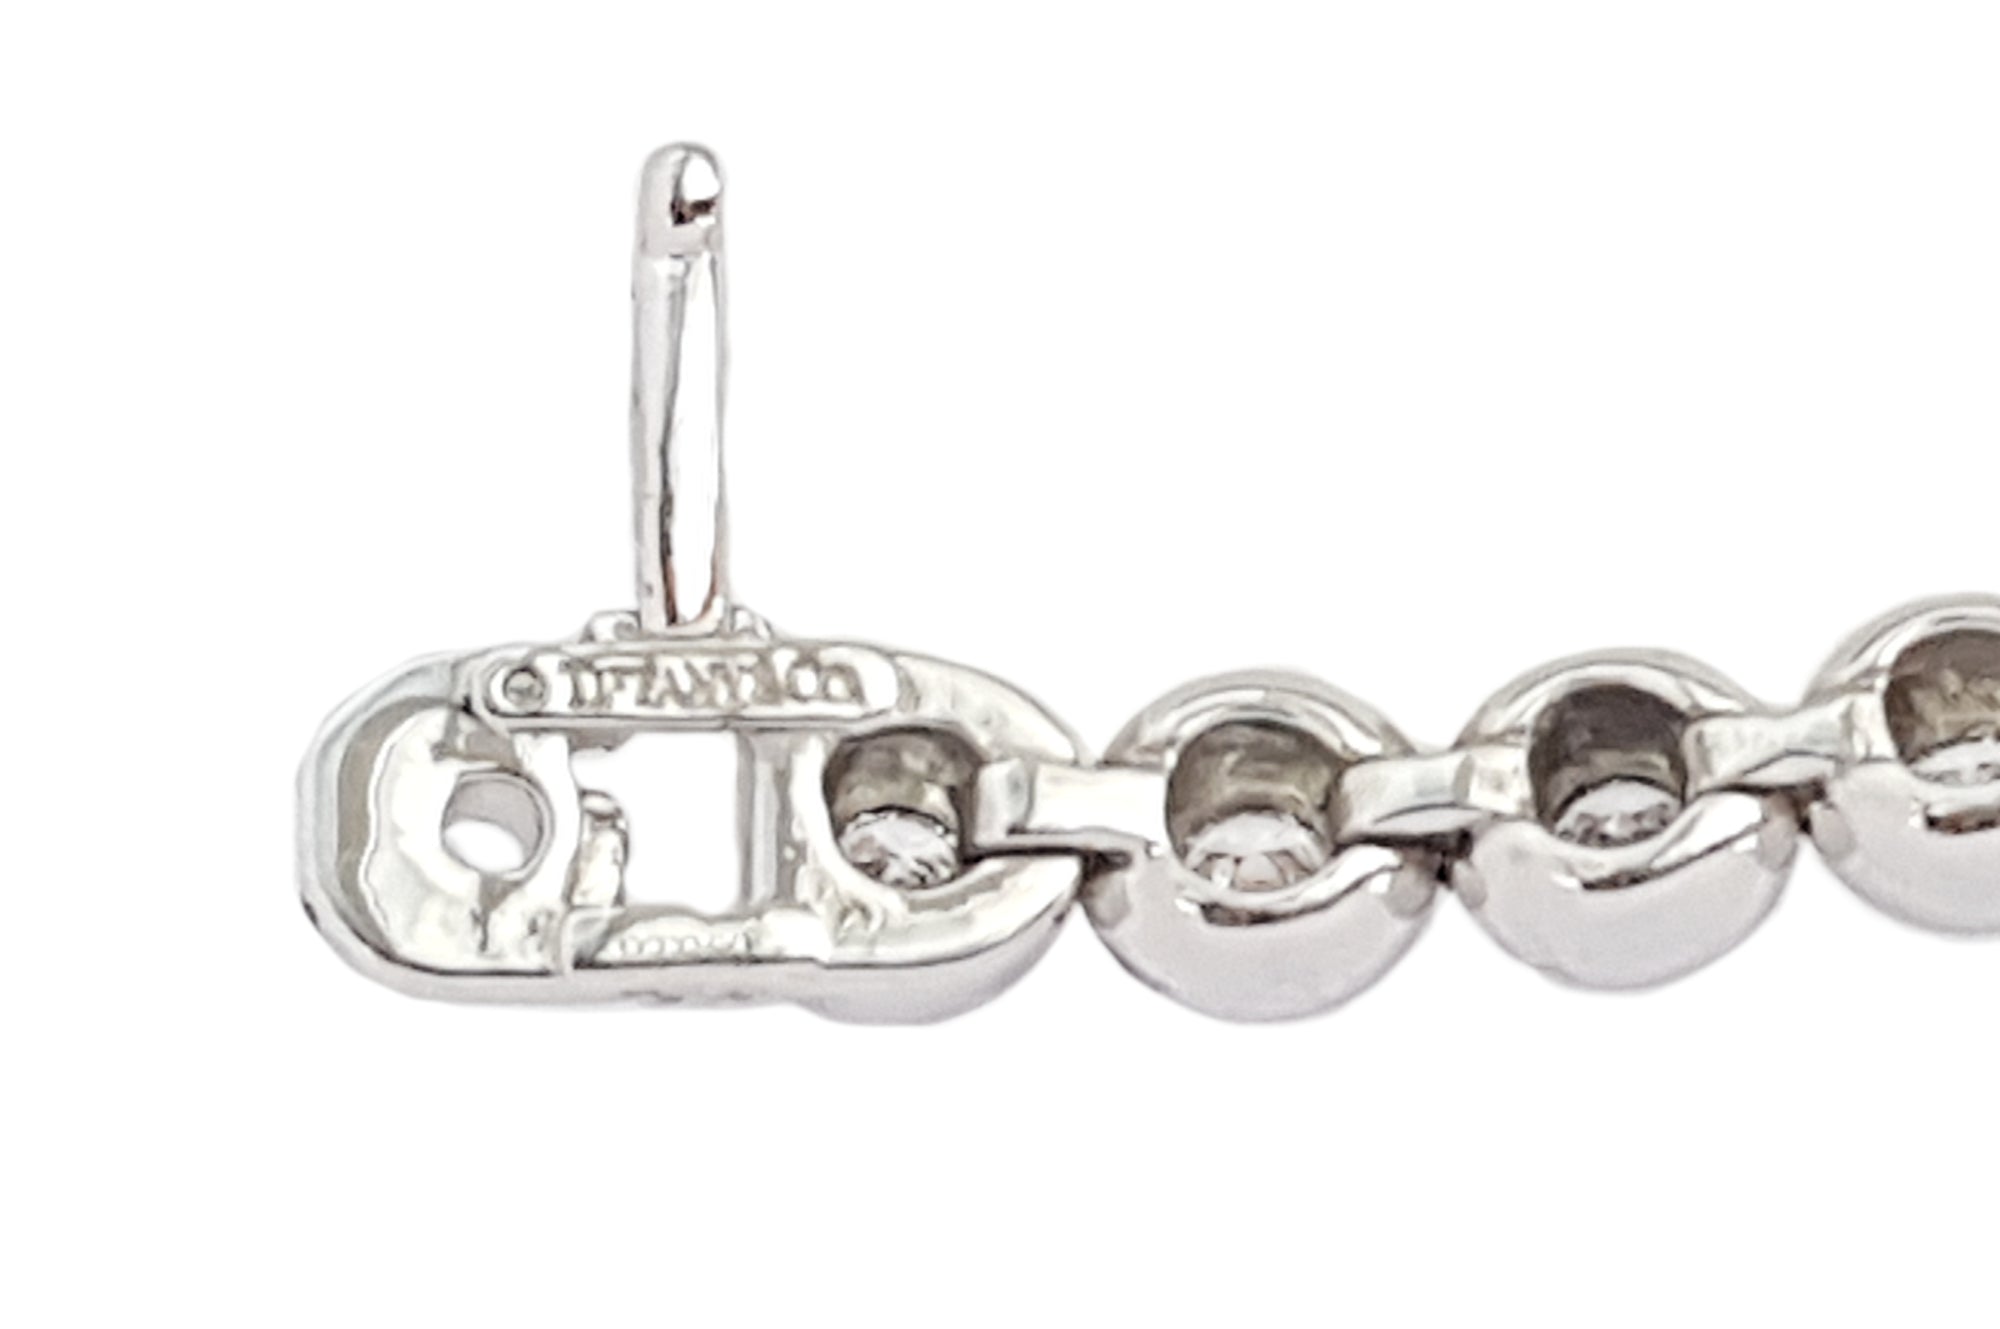 Tiffany & Co. 3.00ct Bezel Set Diamond Line Tennis Bracelet